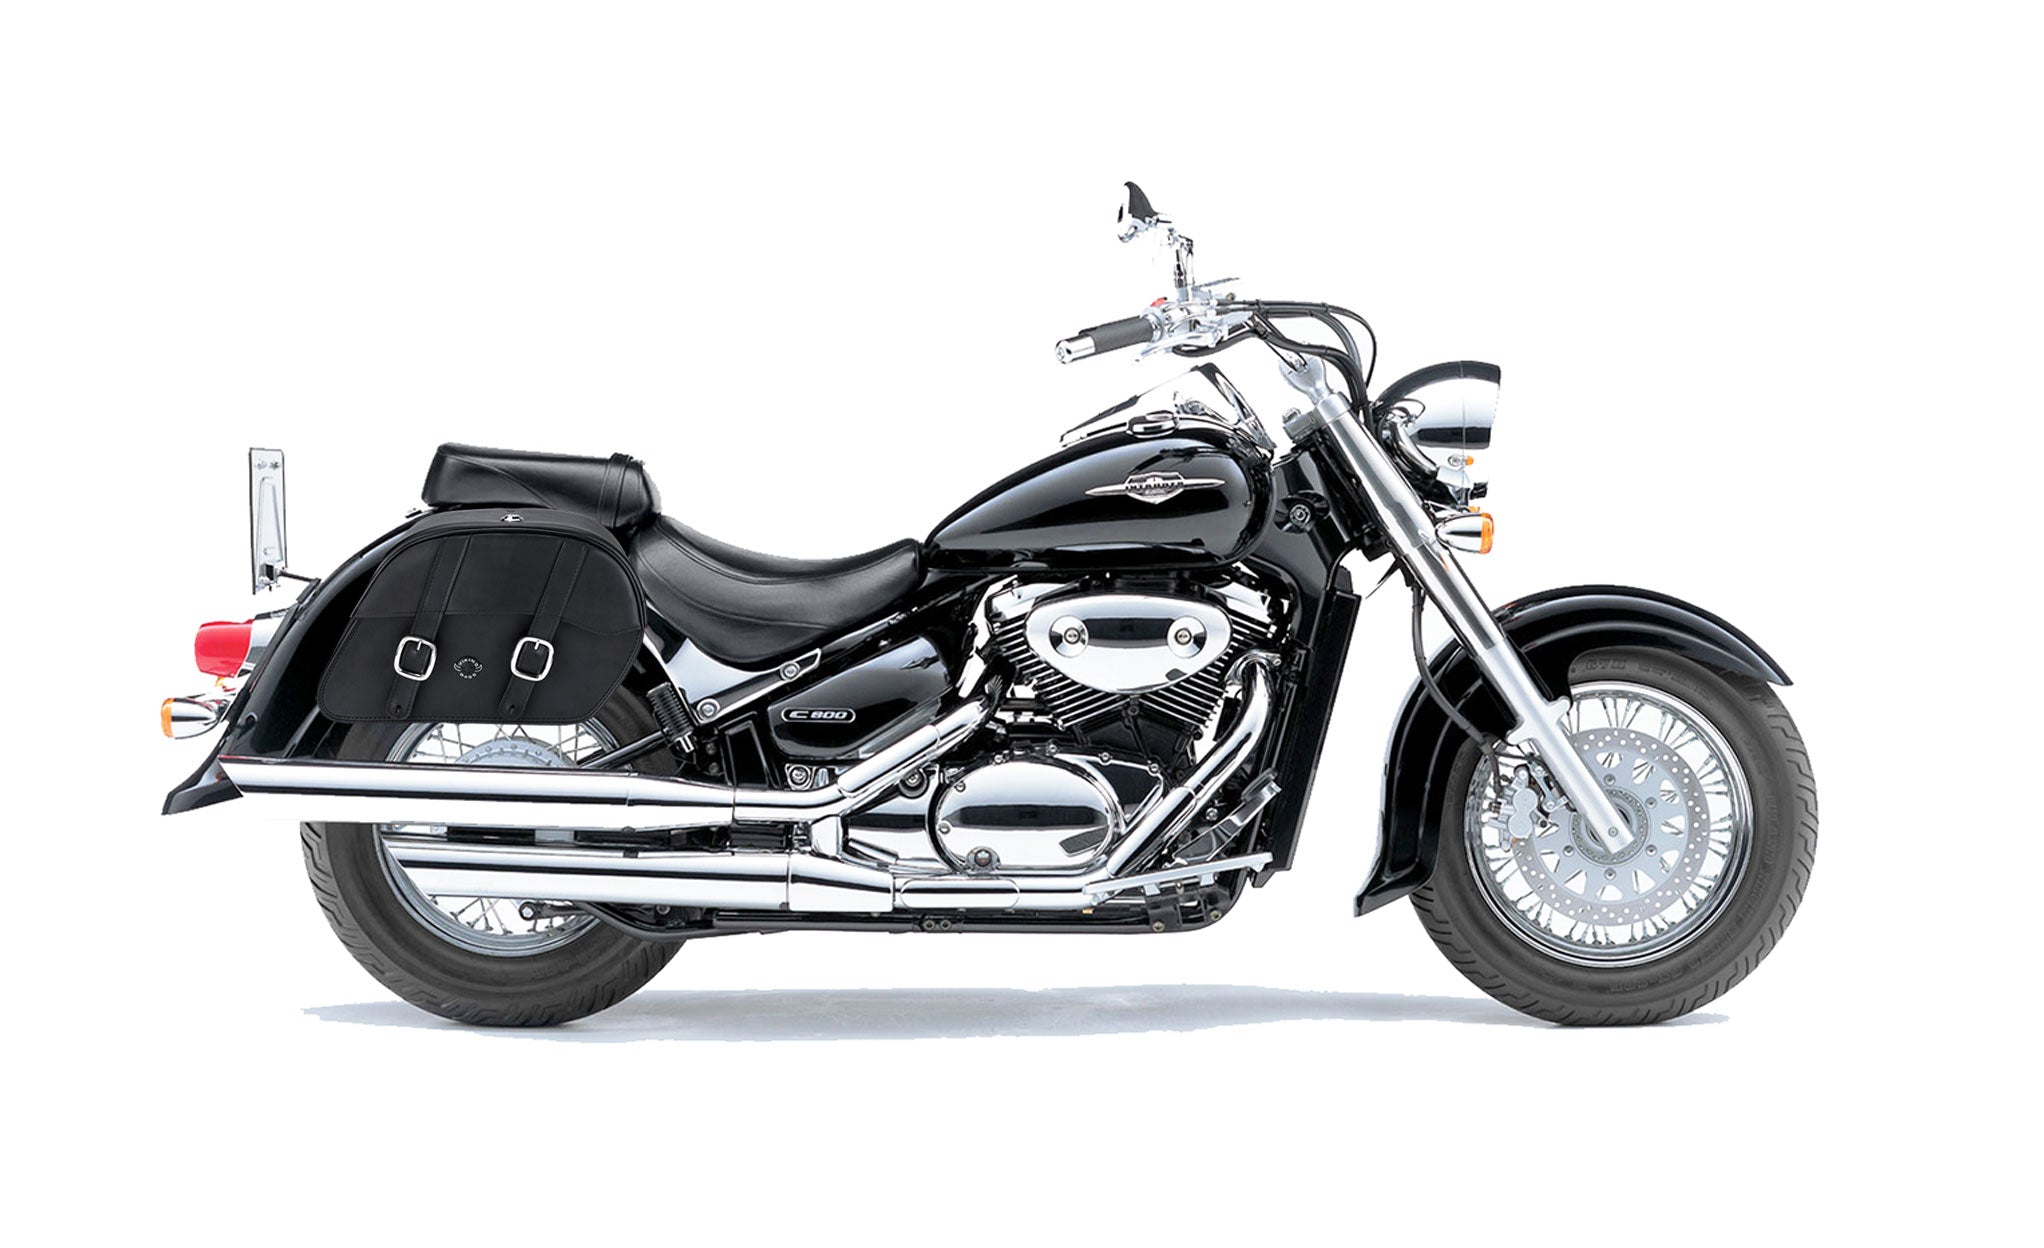 Viking Skarner Medium Lockable Suzuki Volusia 800 Leather Motorcycle Saddlebags on Bike Photo @expand